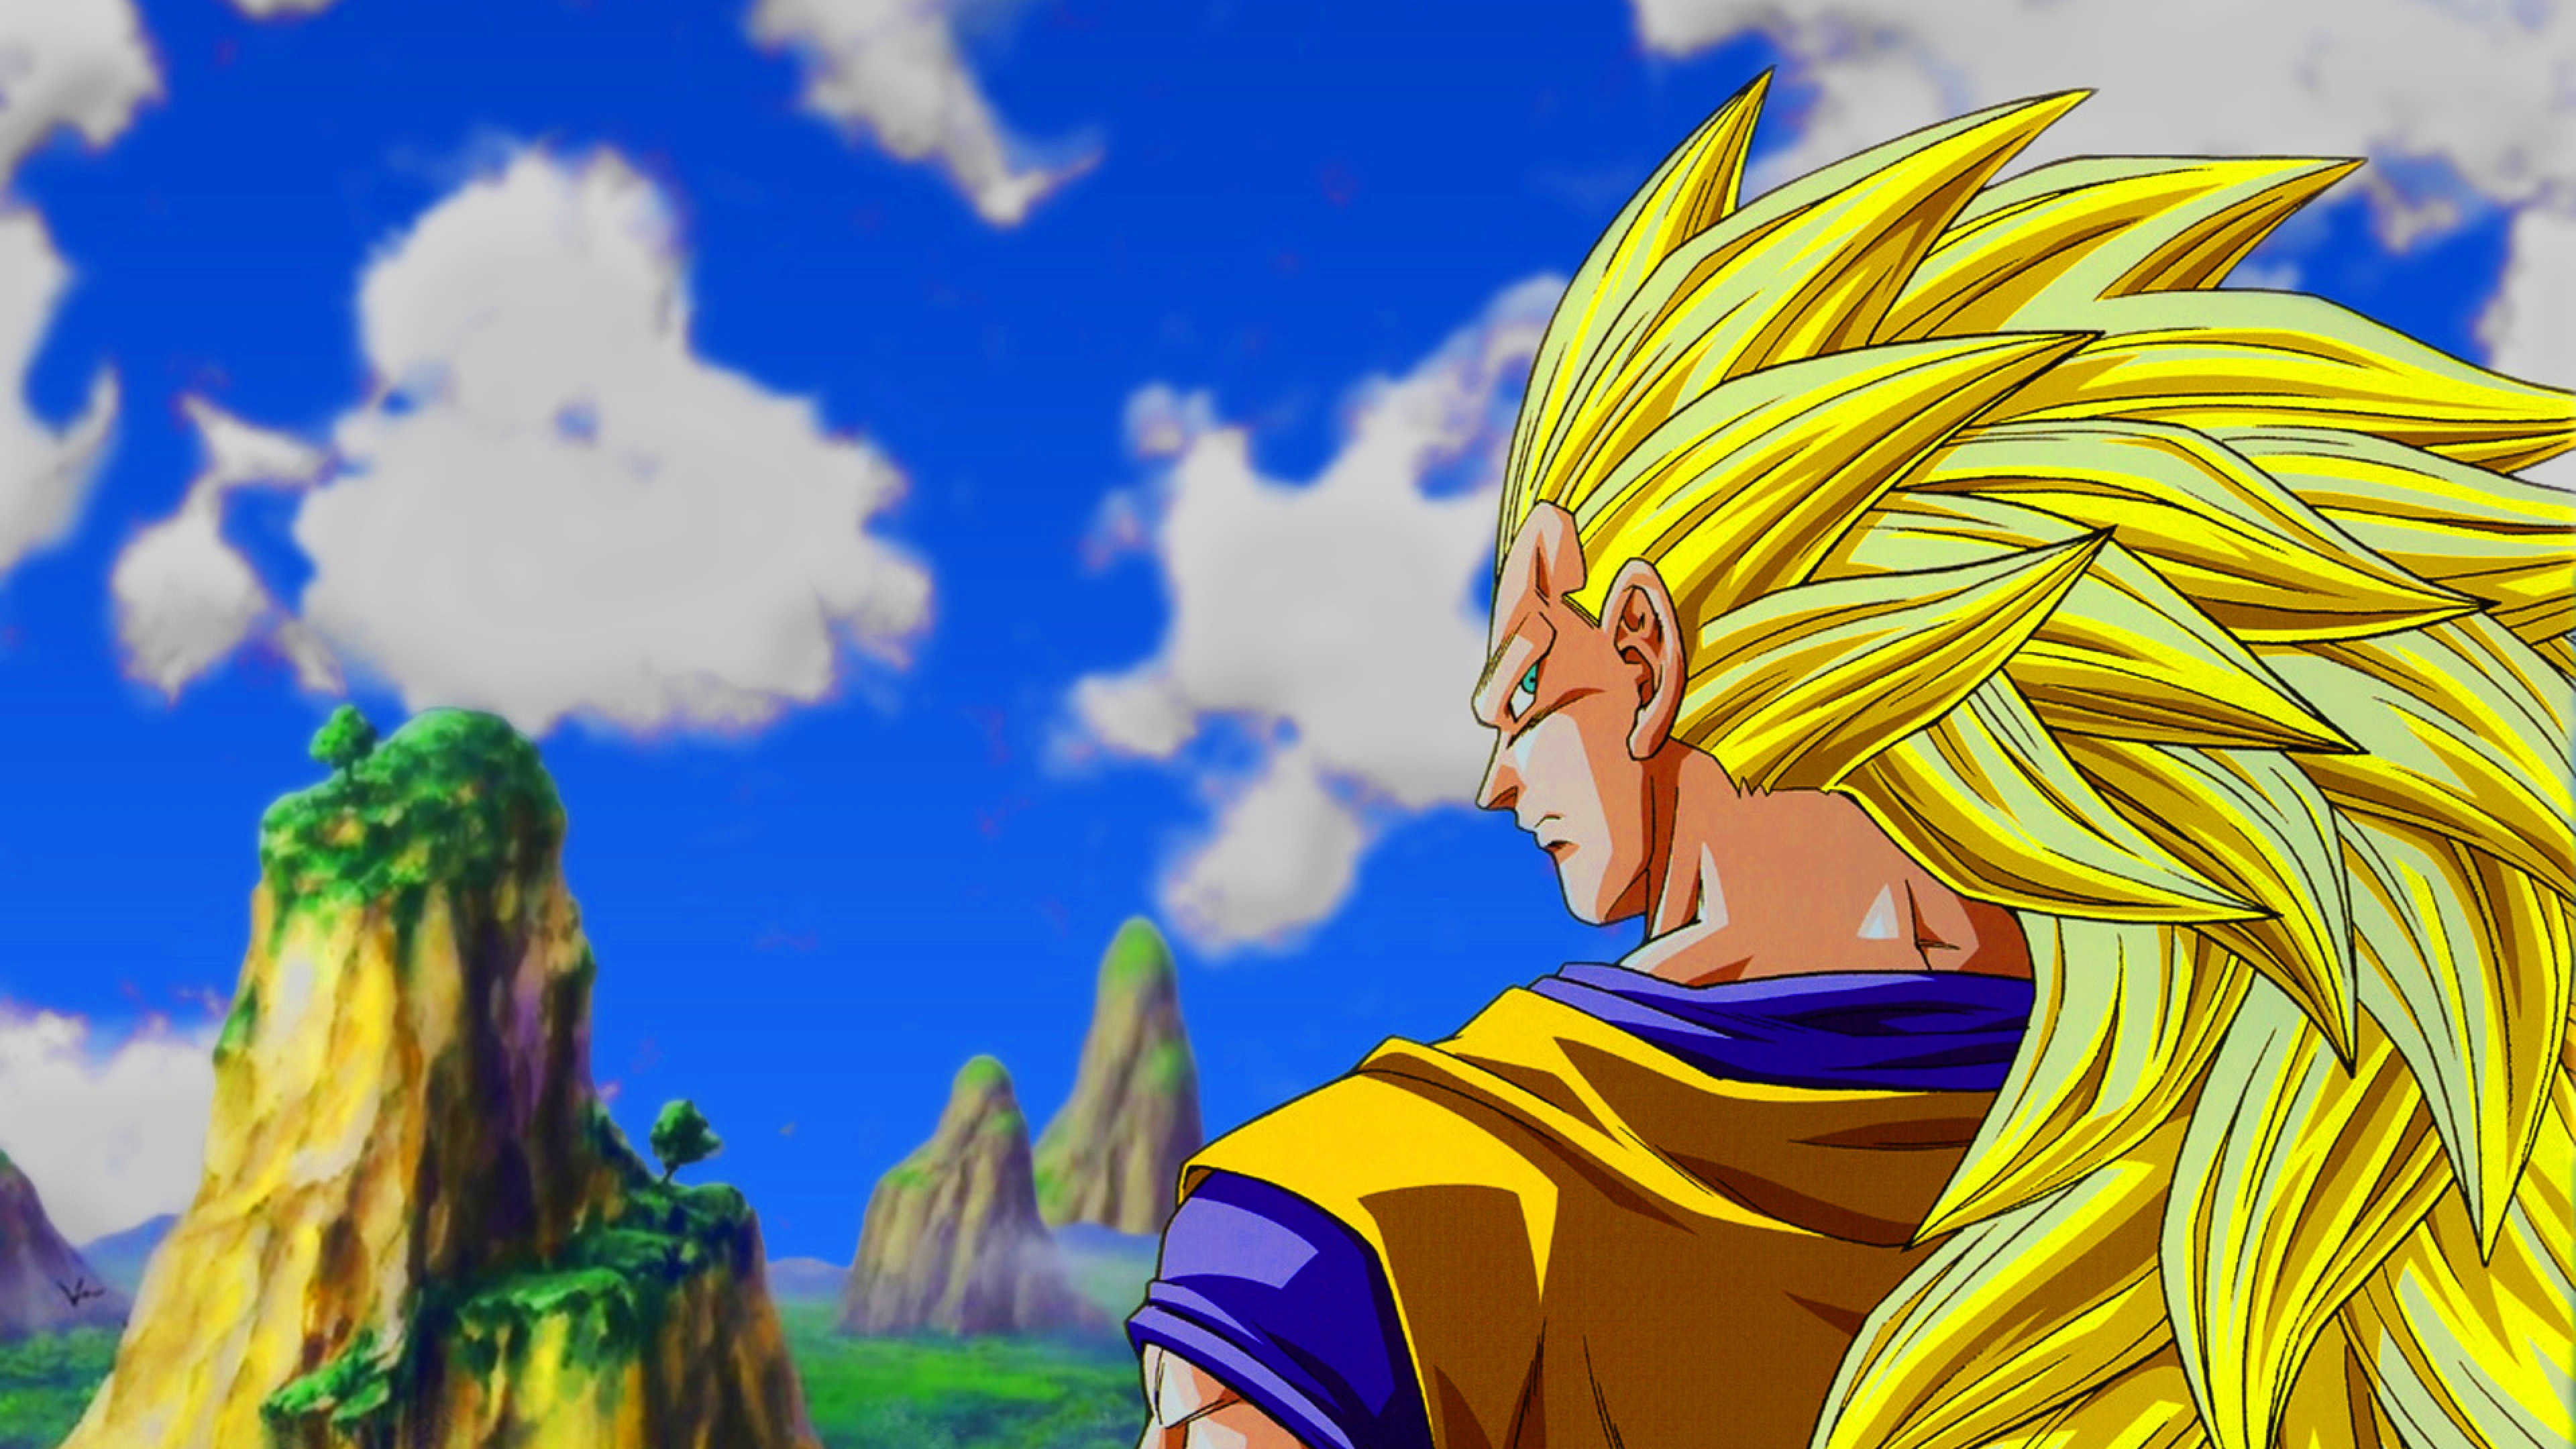 Dragon Ball Z Pictures - Goku Super Saiyan 3 | HD ...